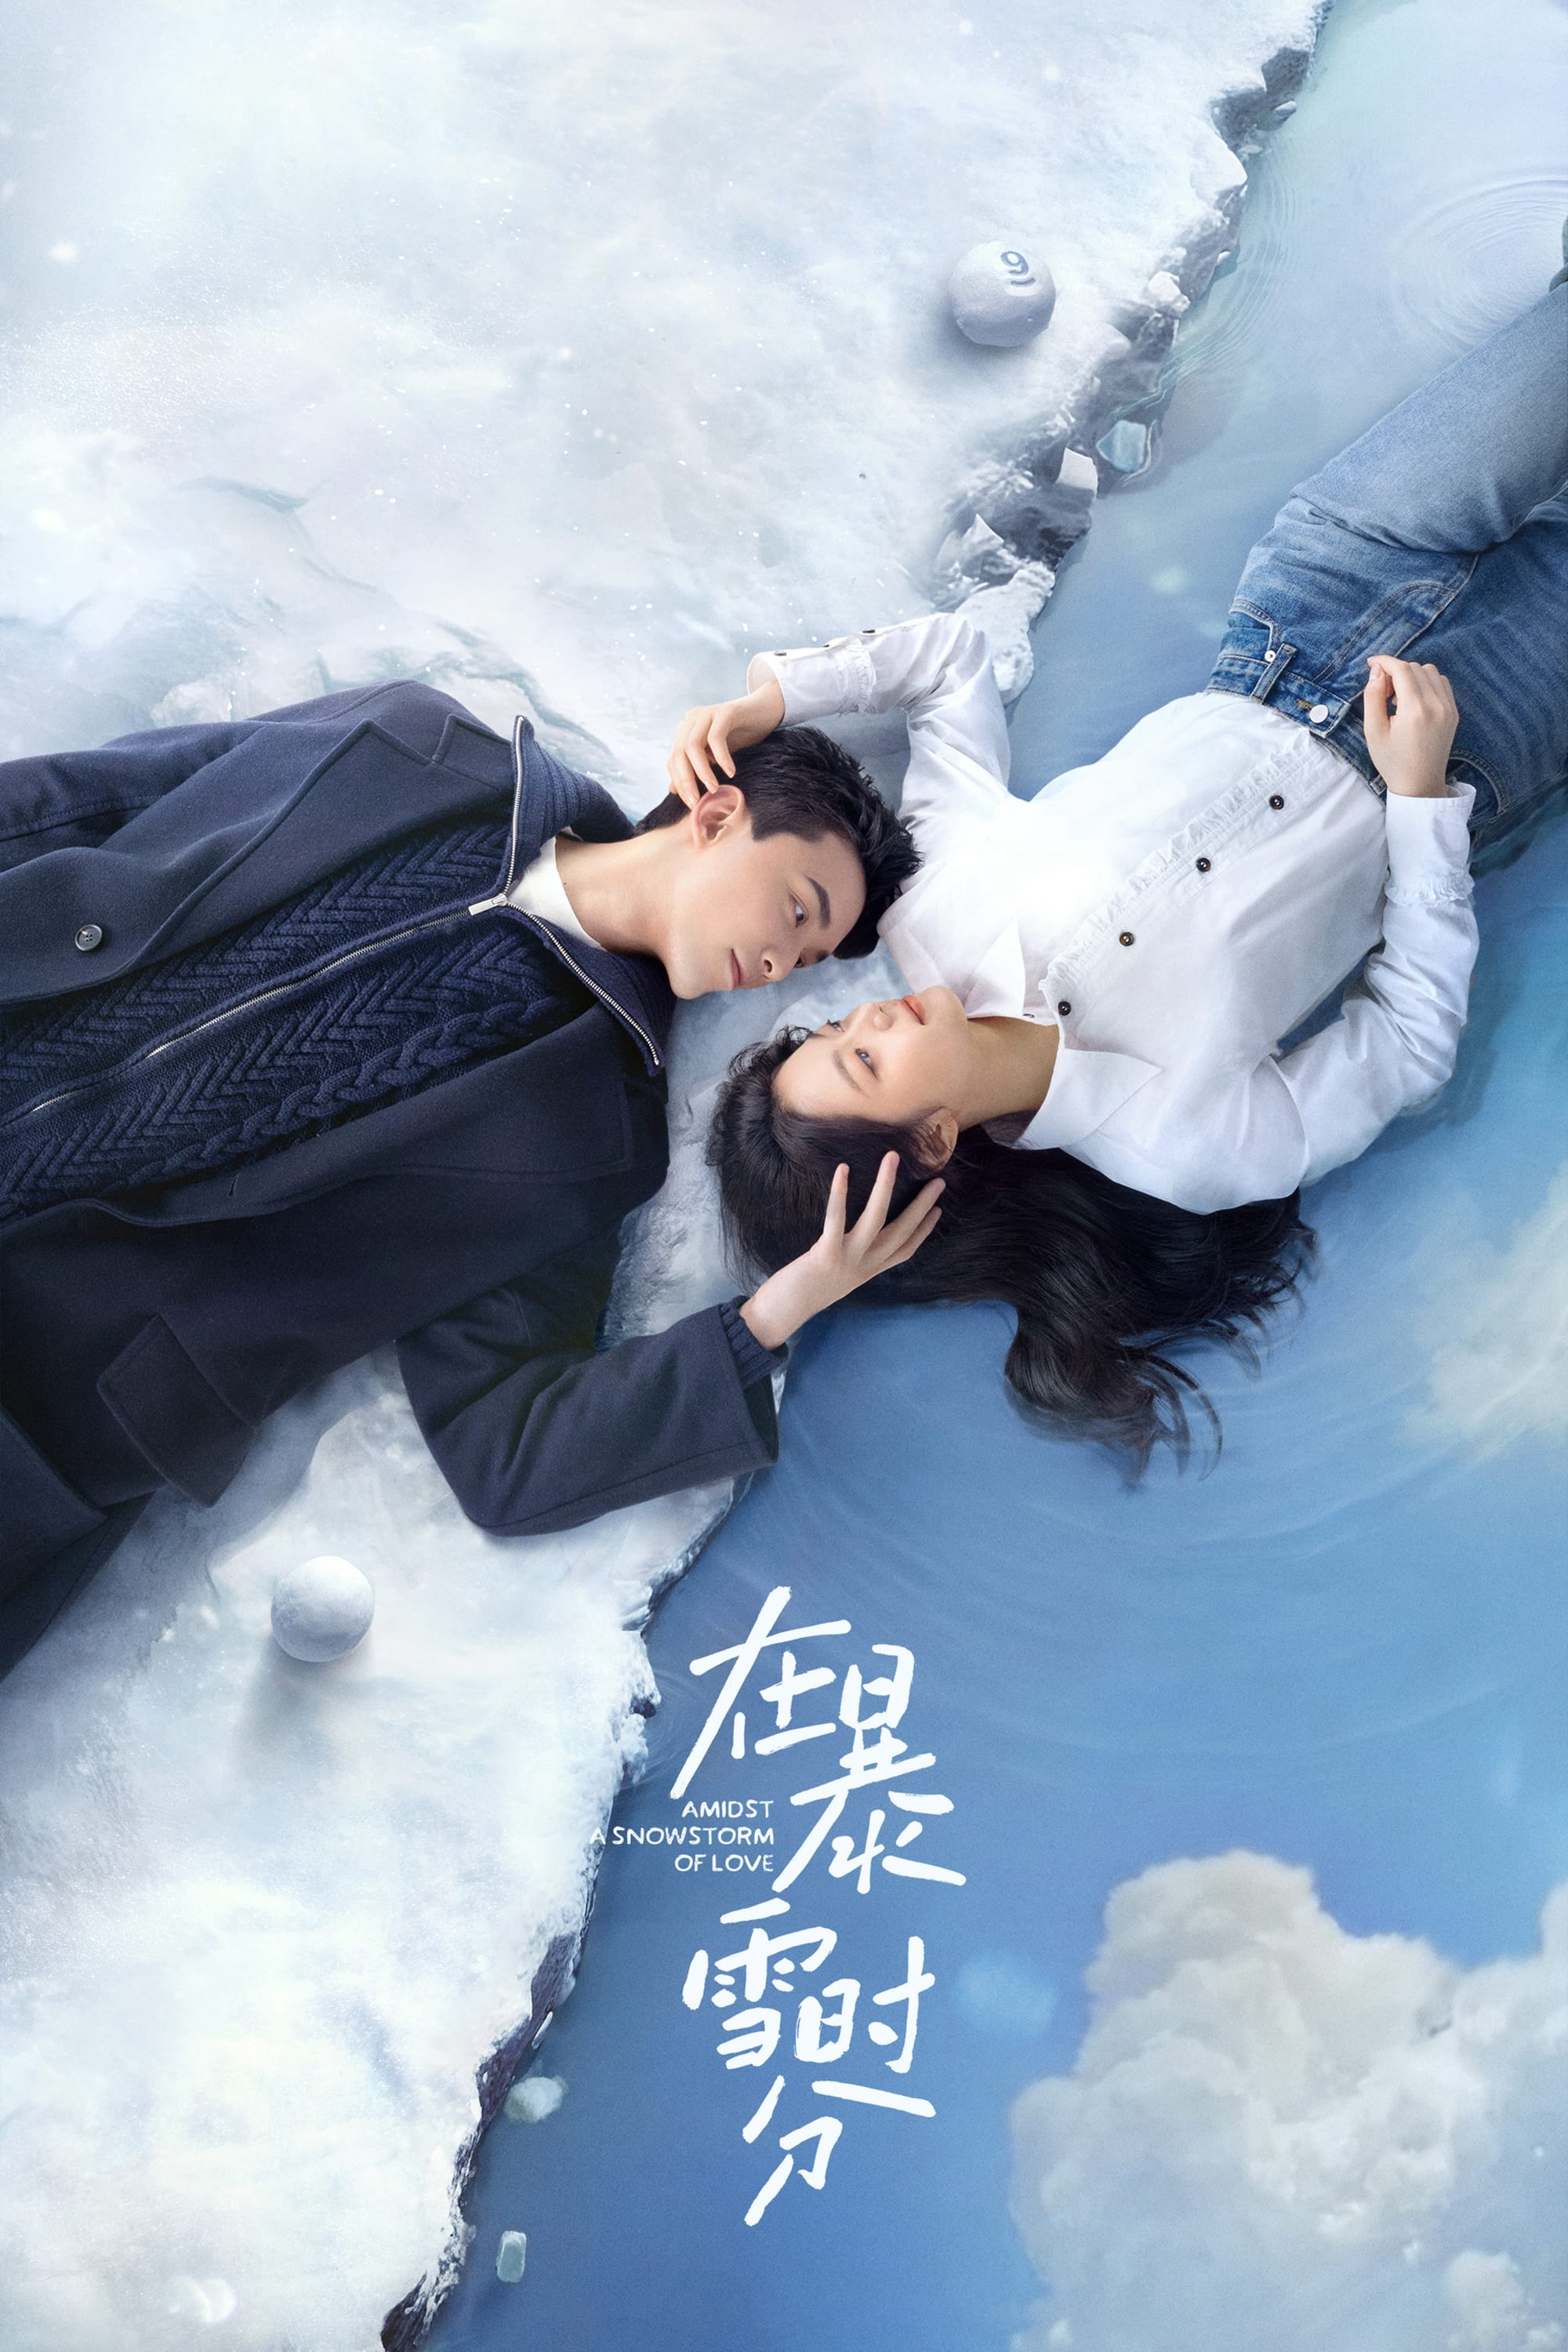 Poster Phim Giữa Cơn Bão Tuyết (Amidst a Snowstorm of Love)